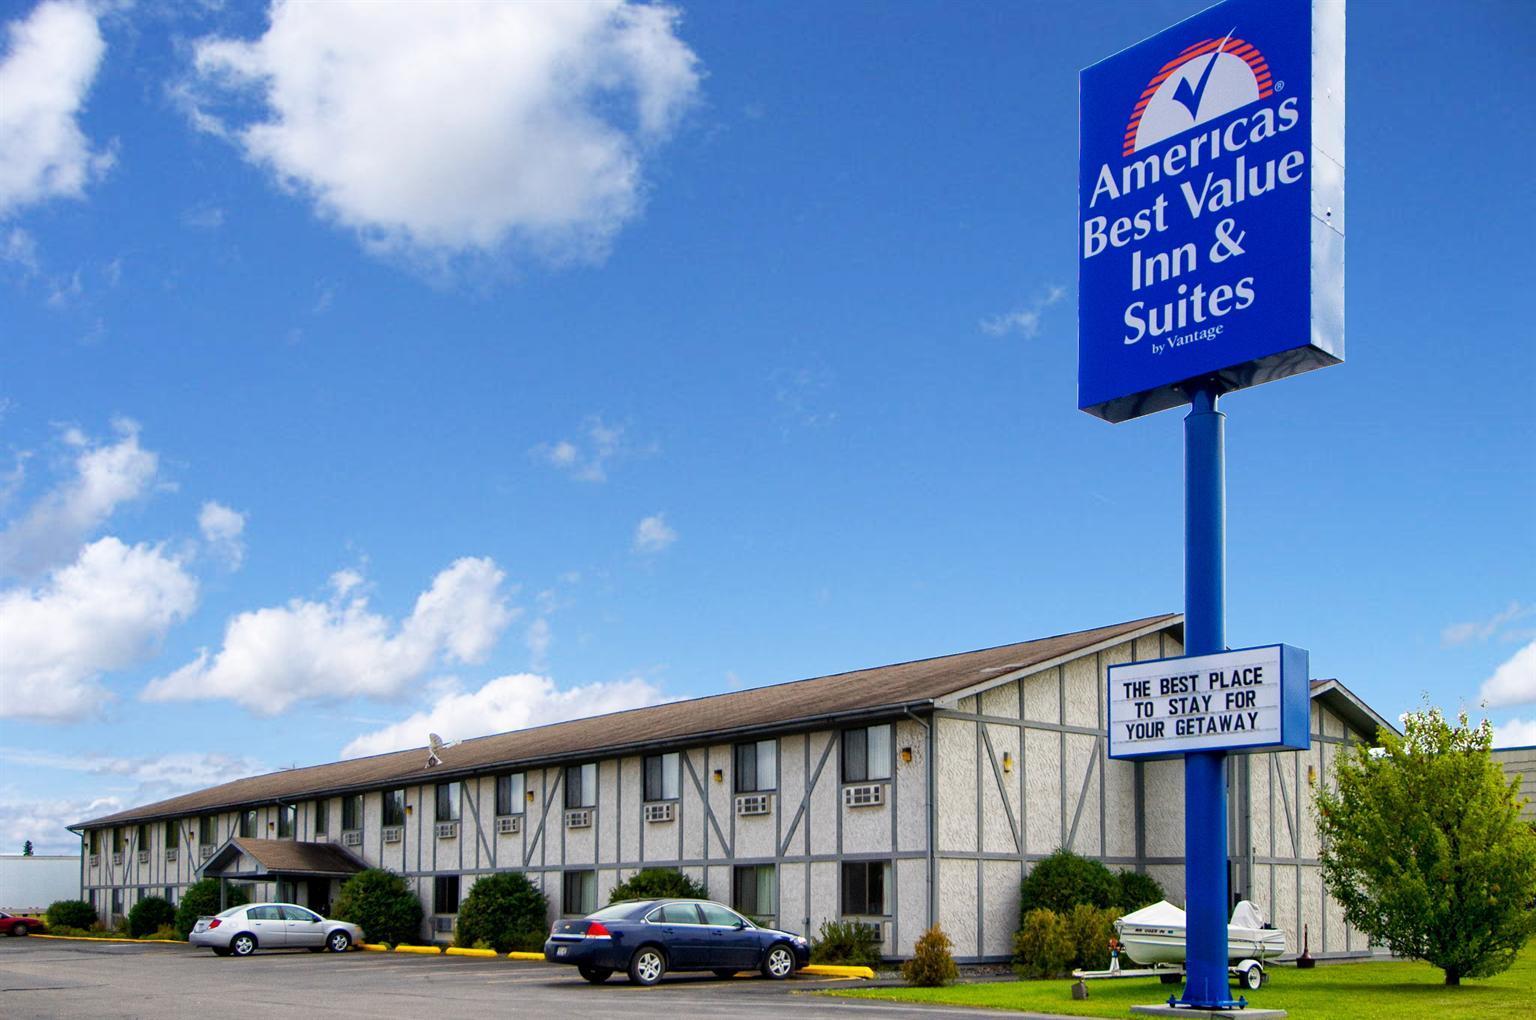 Americas Best Value Inn & Suites - International Falls